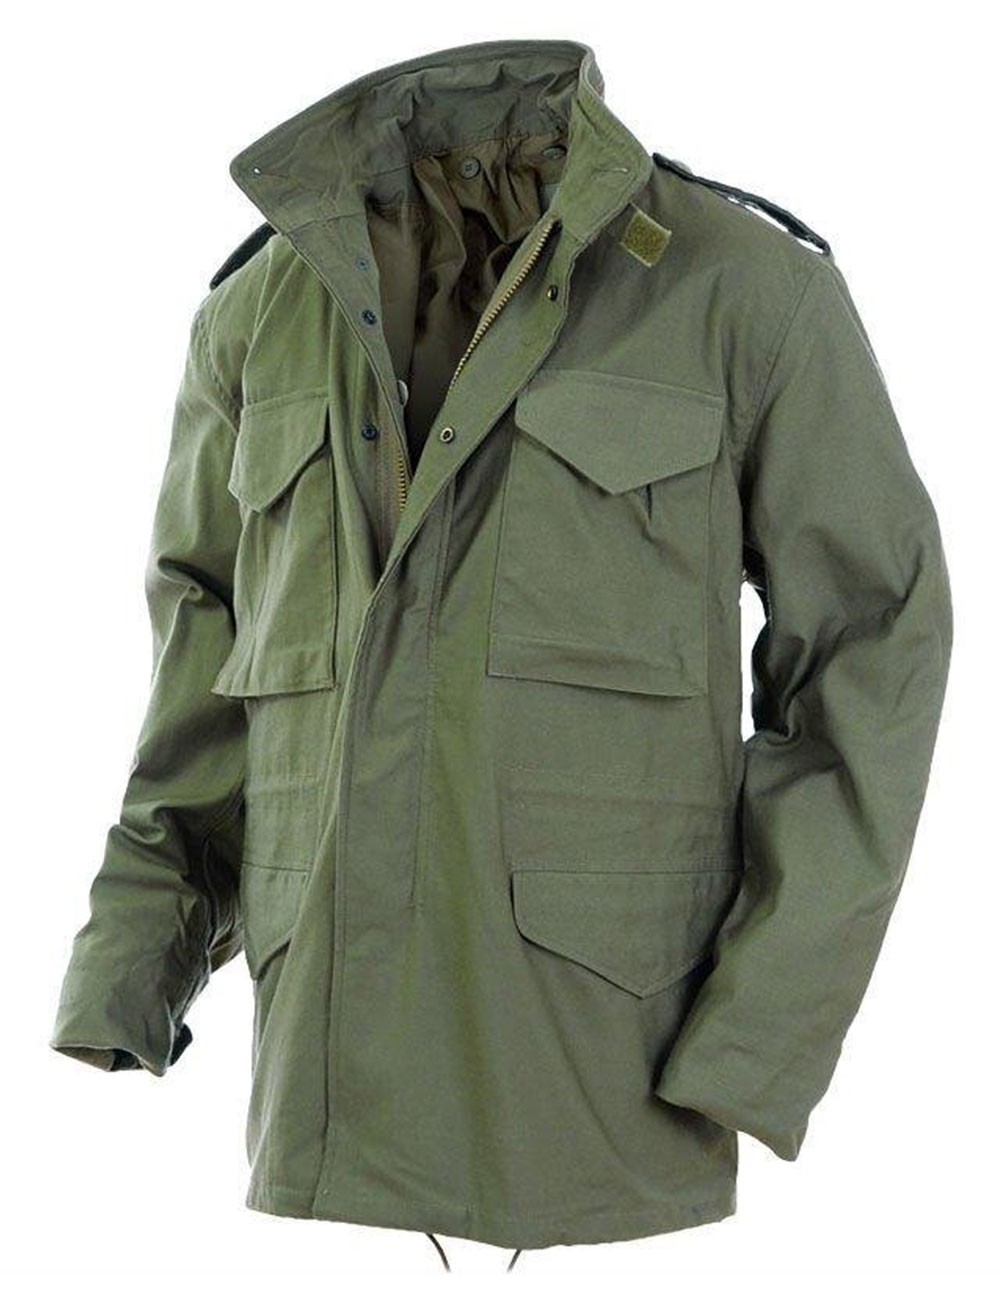 M 65 купить. Куртка м65 койот. Американская куртка м65. Куртка милитари м65 олива. Полевая куртка m65 хаки.